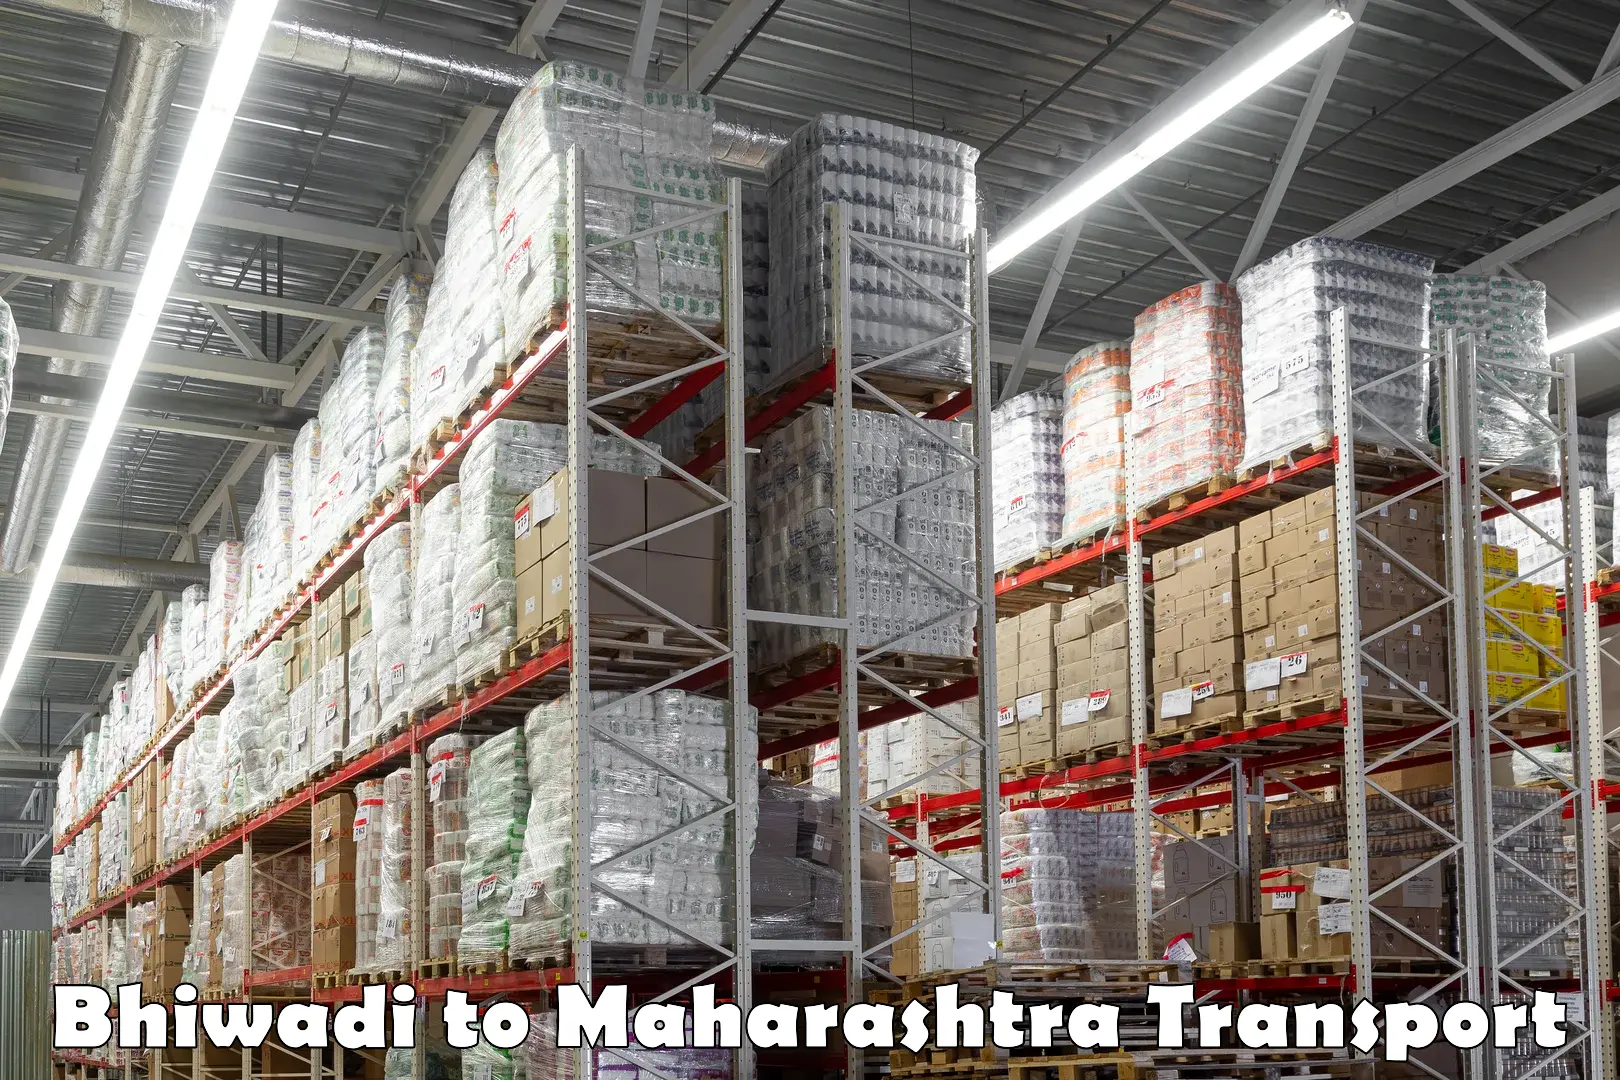 Truck transport companies in India Bhiwadi to Maharashtra